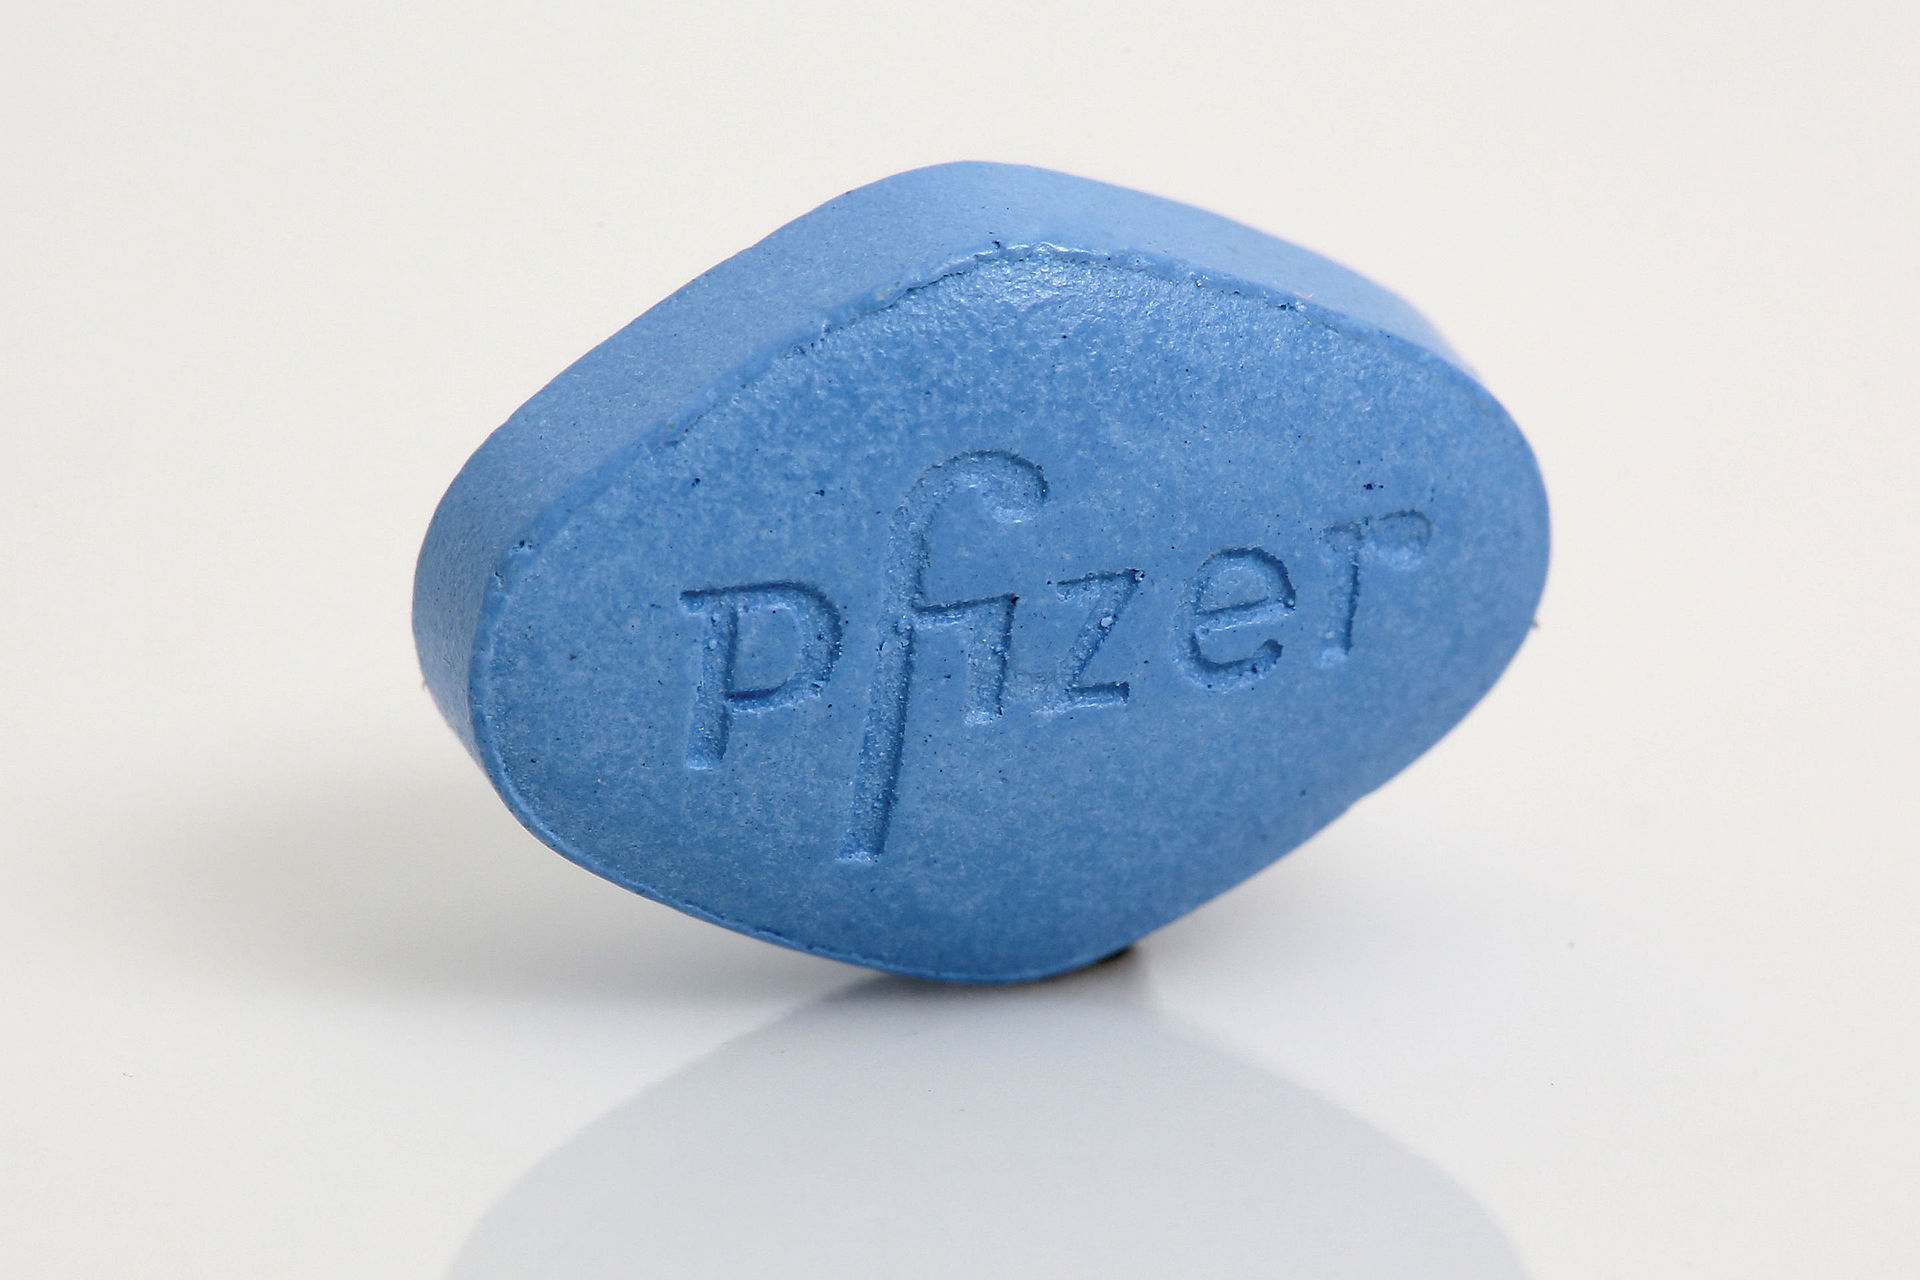 The blue Viagra pill